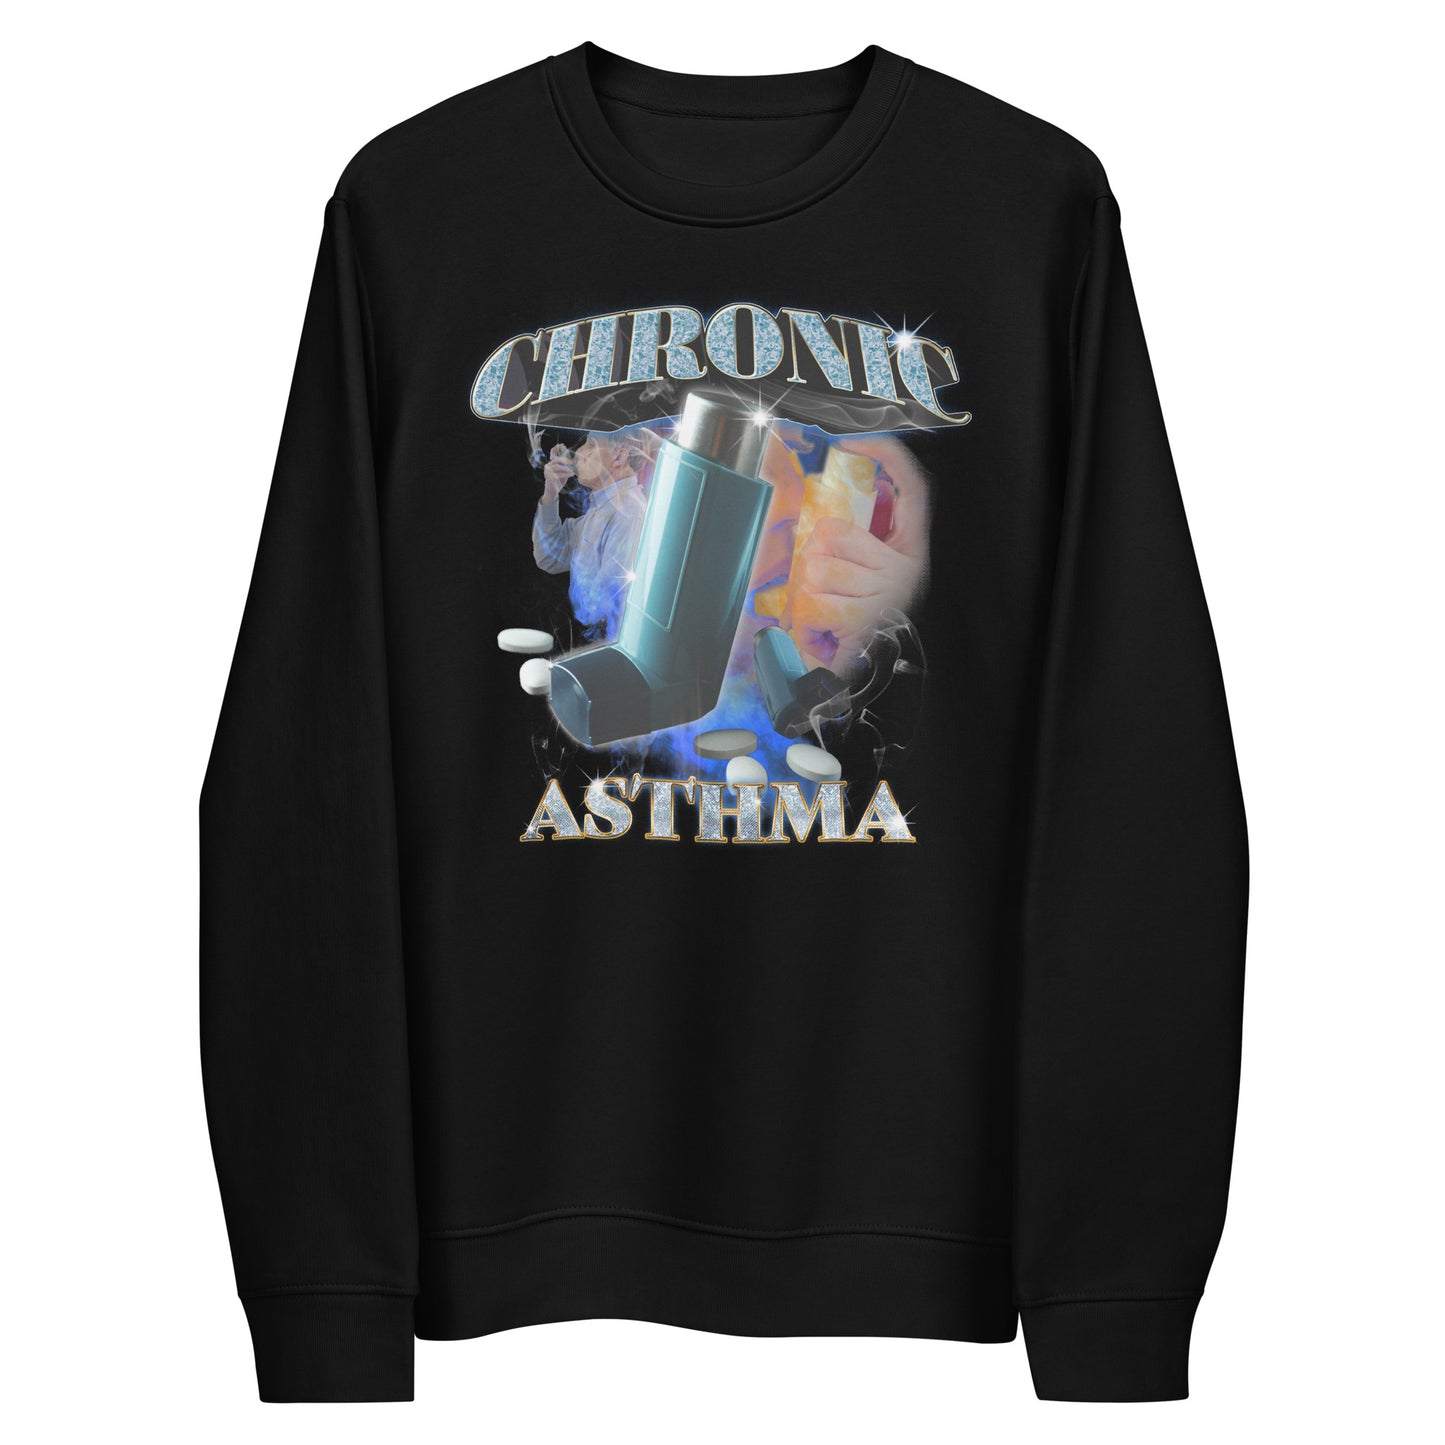 Chronic Asthma - Sweatshirt